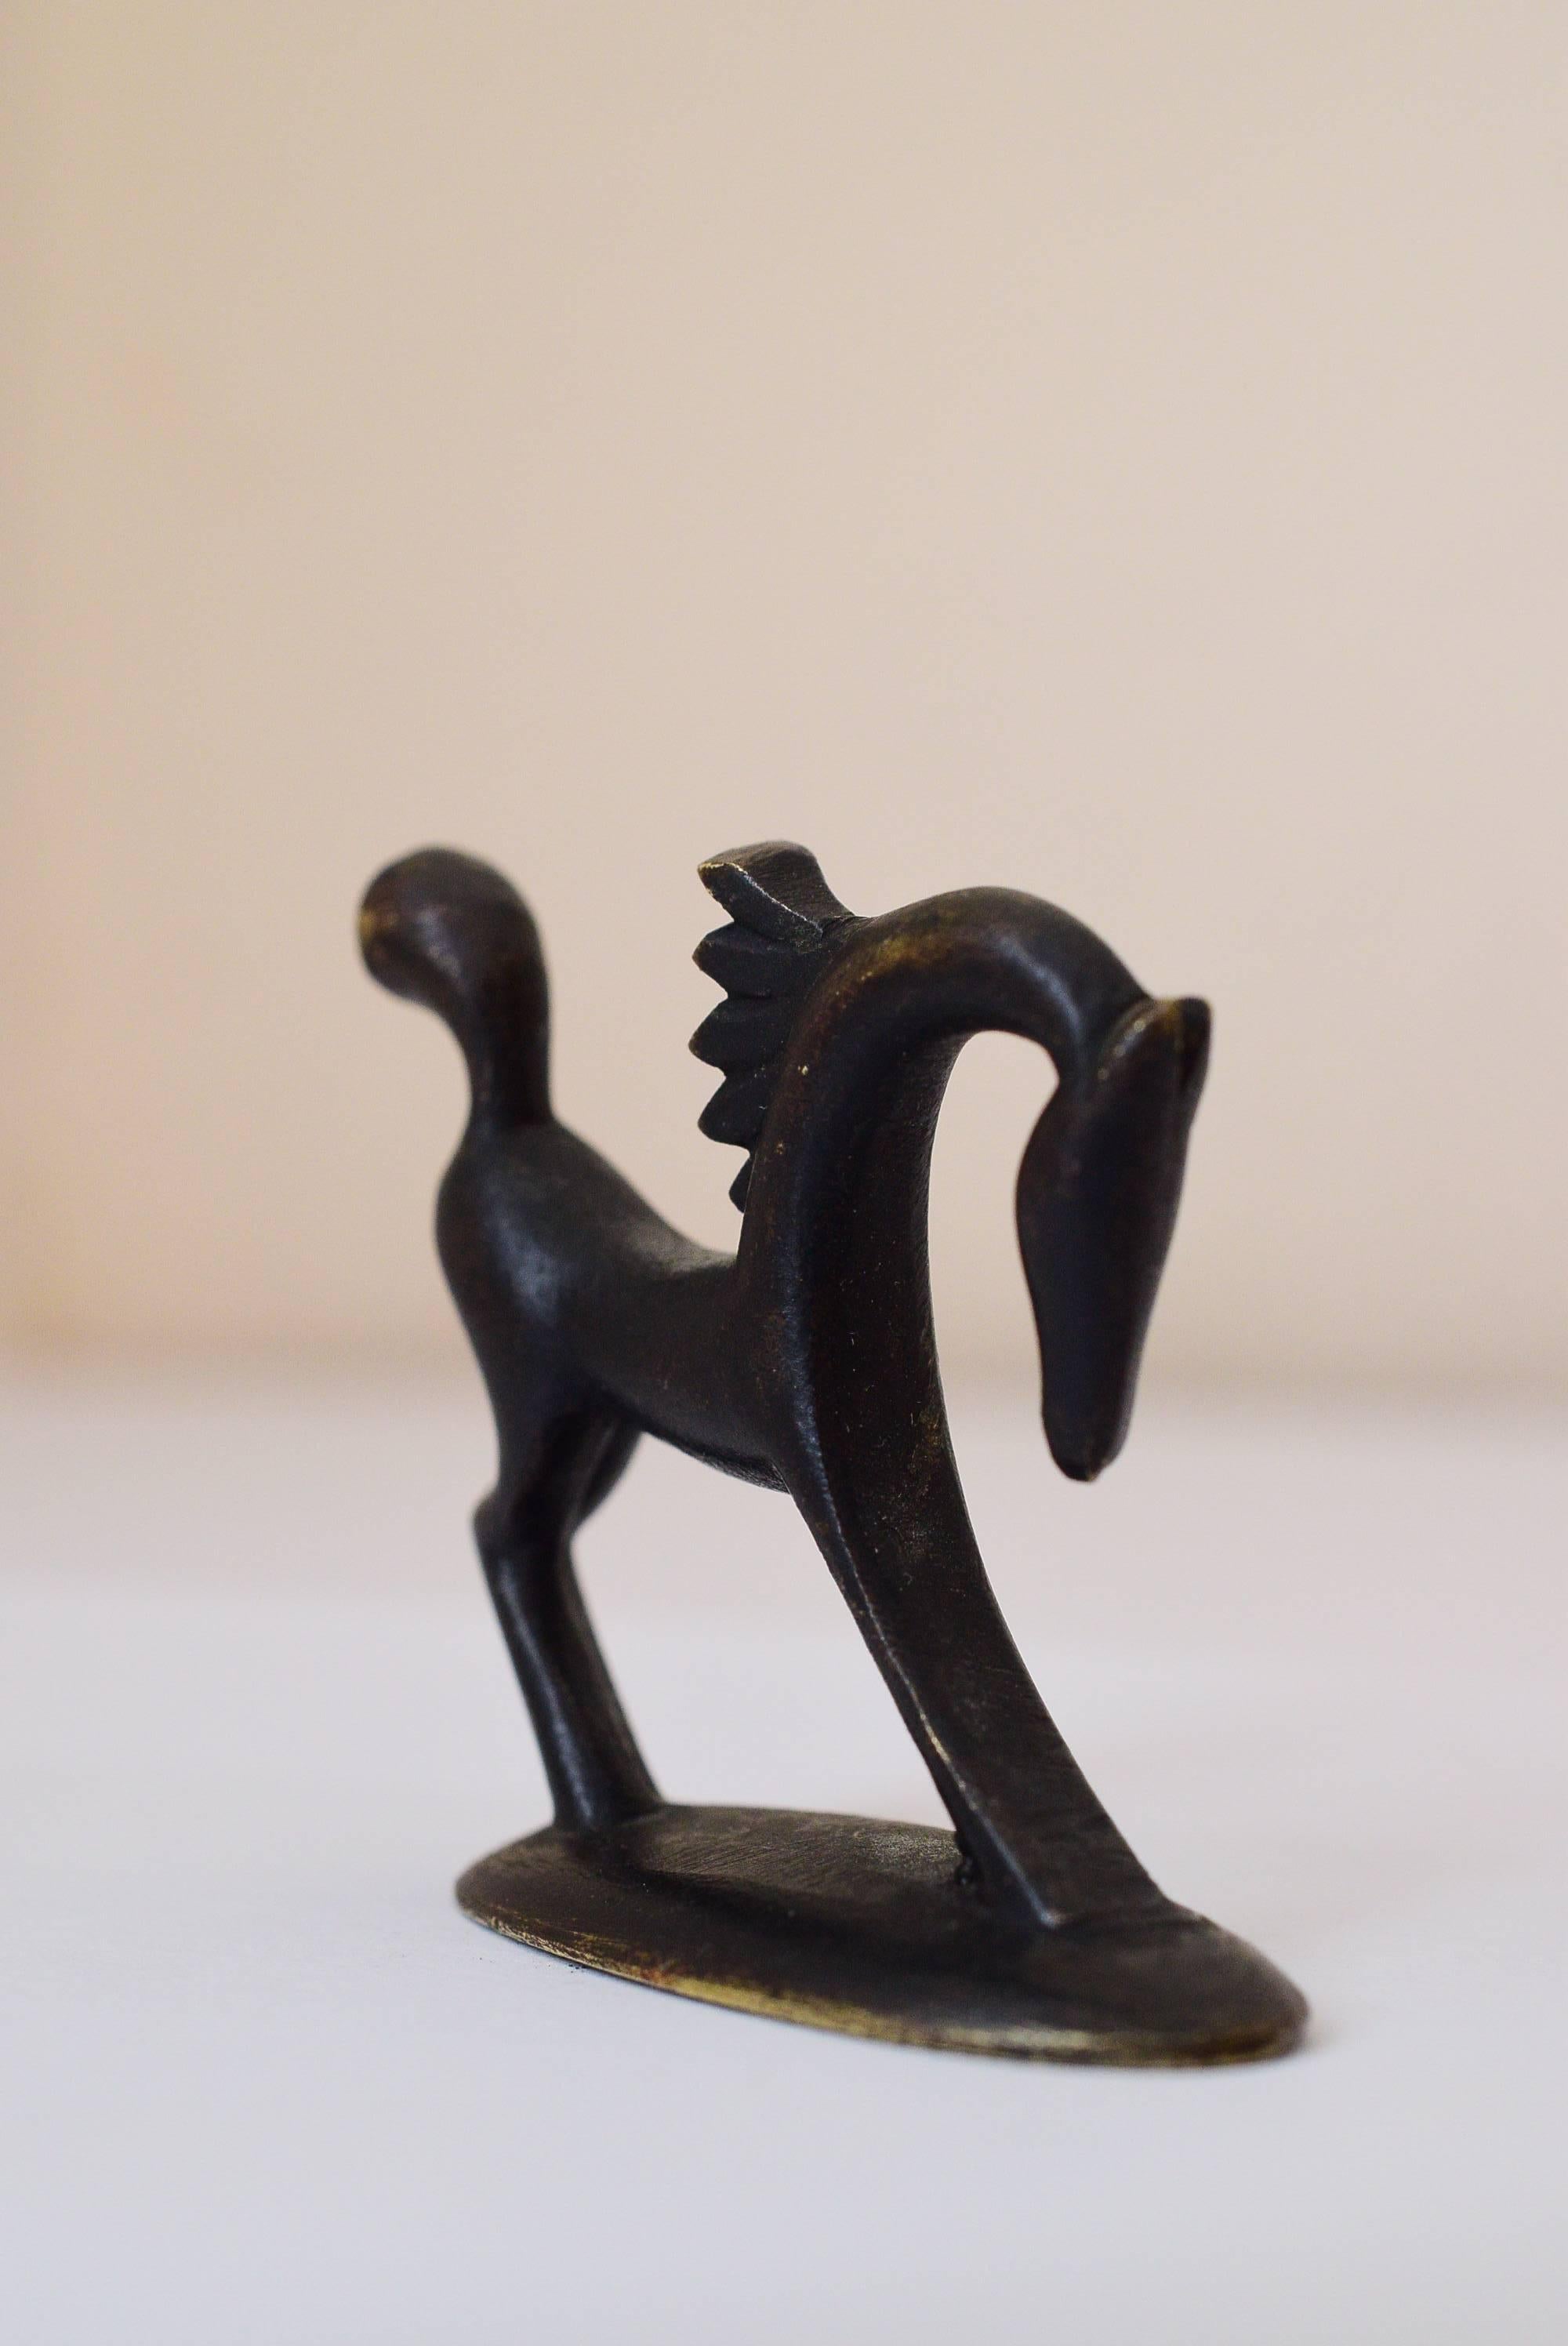 Horse figurine by Hagenauer.

Original condition.